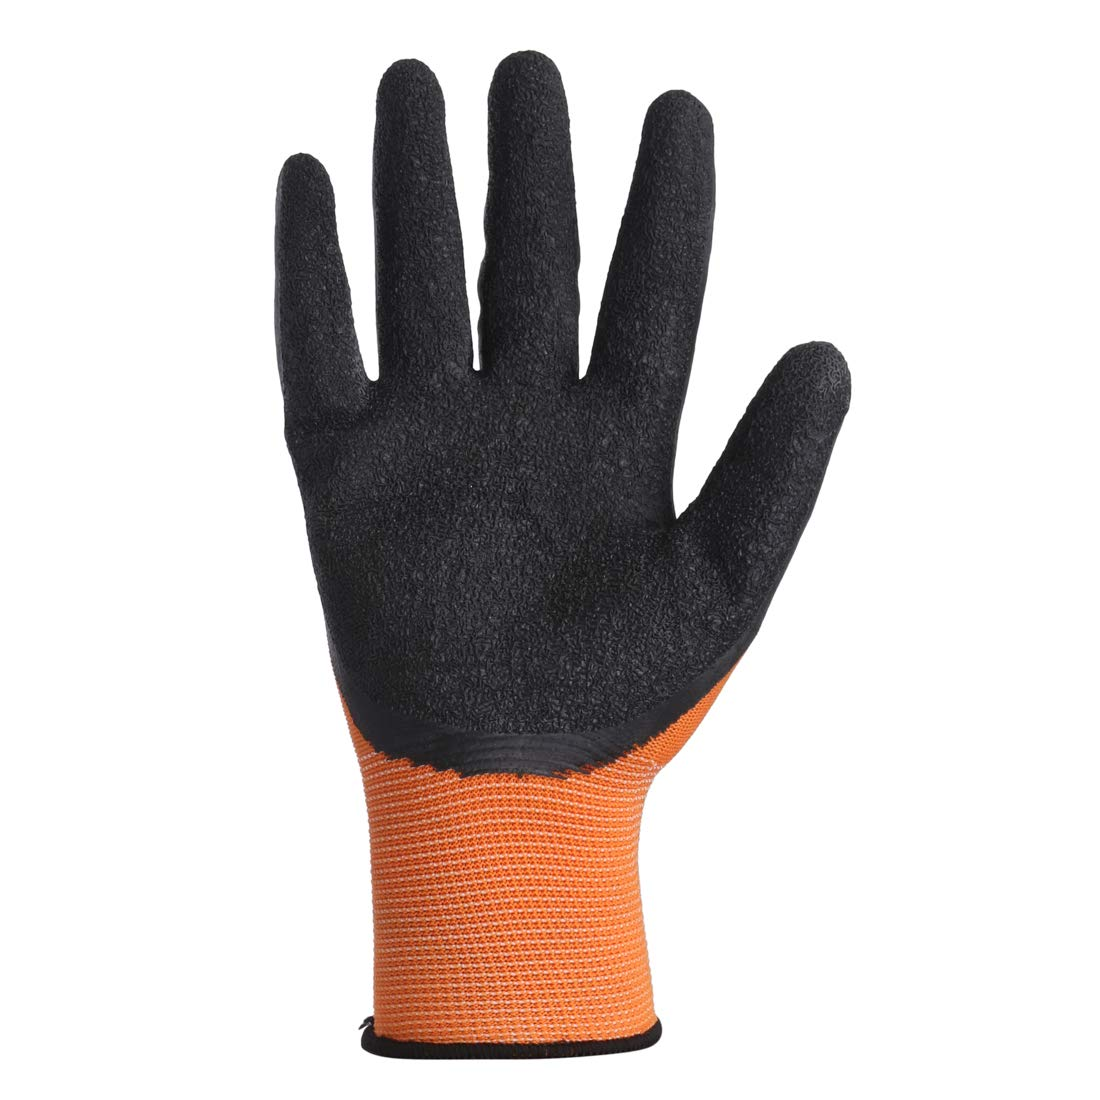 /storage/photos/1/karam new product/Karam Safety gloves hs 01 2.png